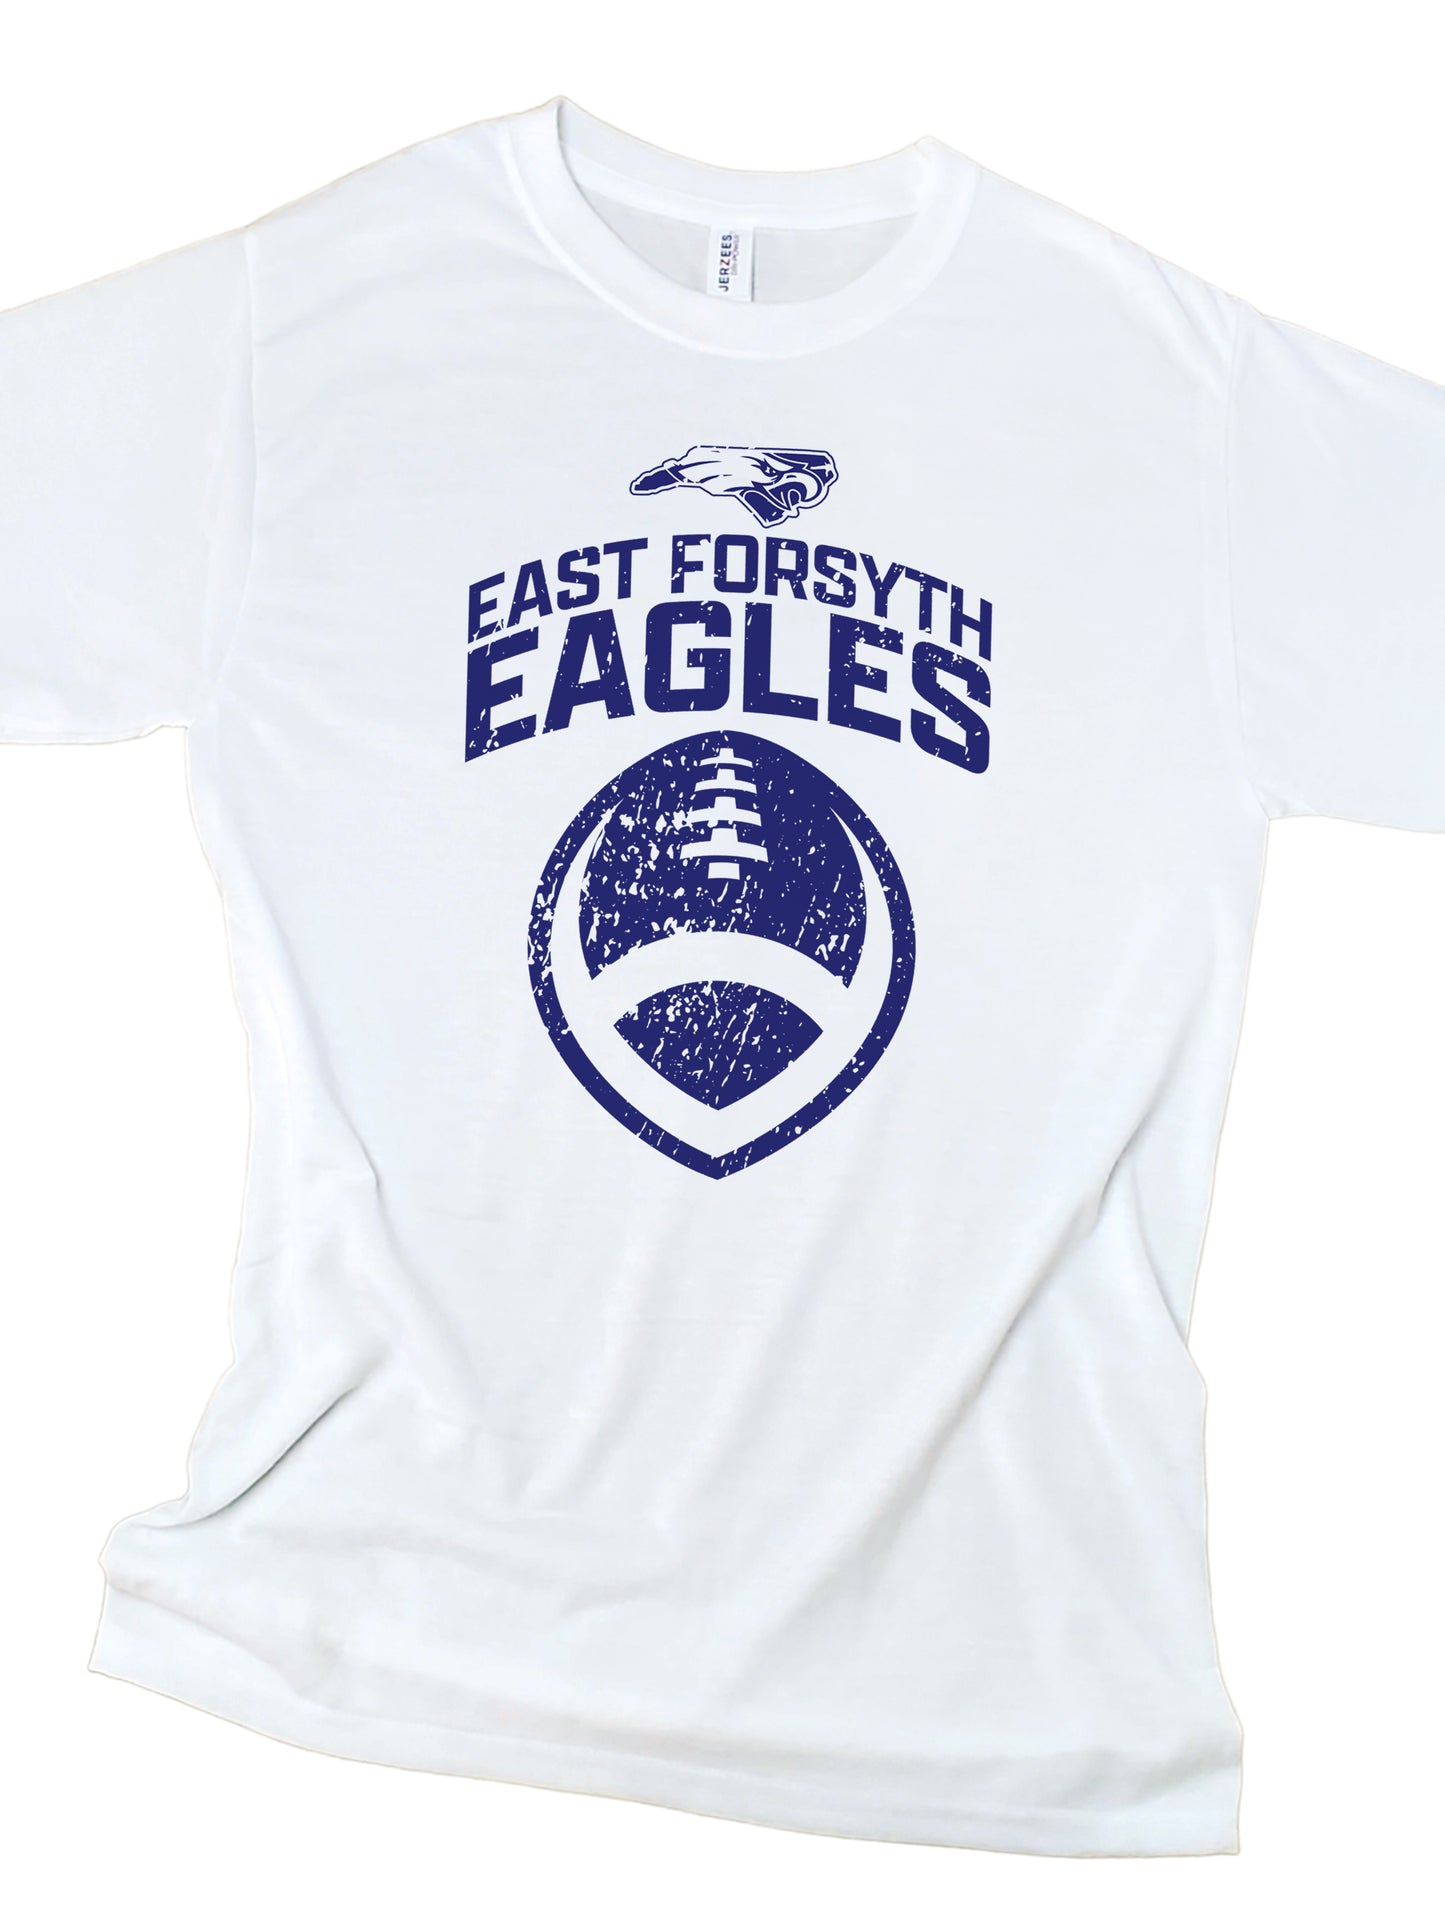 East Forsyth Eagles Shirt, East Forsyth Eagles Spirit Wear, Touchdown Club Shirts